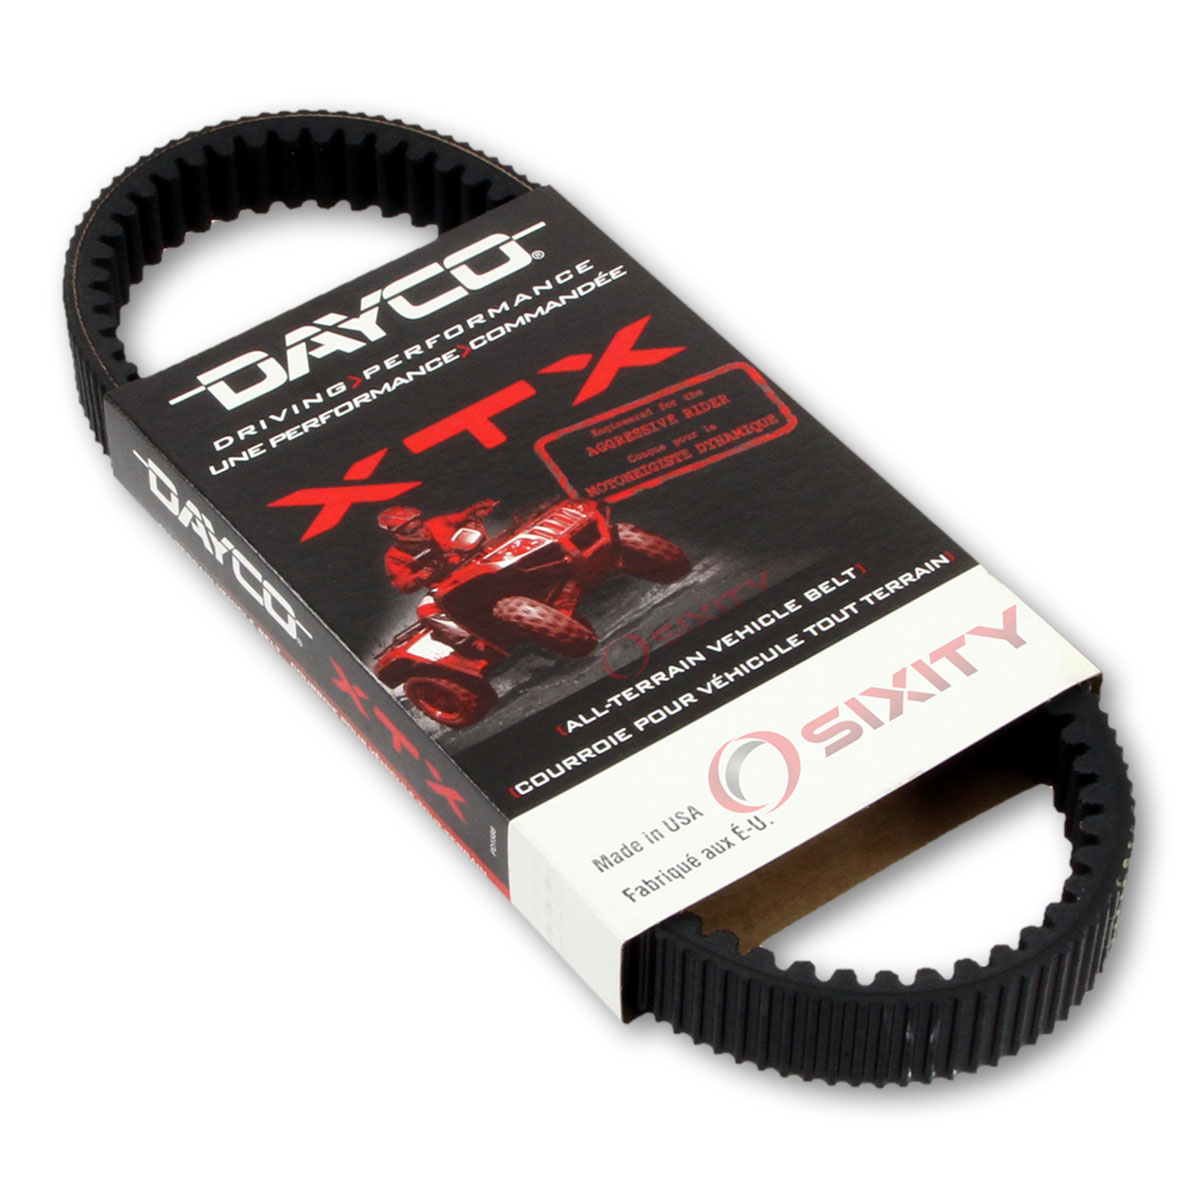 Dayco XTX Drive Belt for 2013 Arctic Cat 500 Core - Extreme Torque CVT